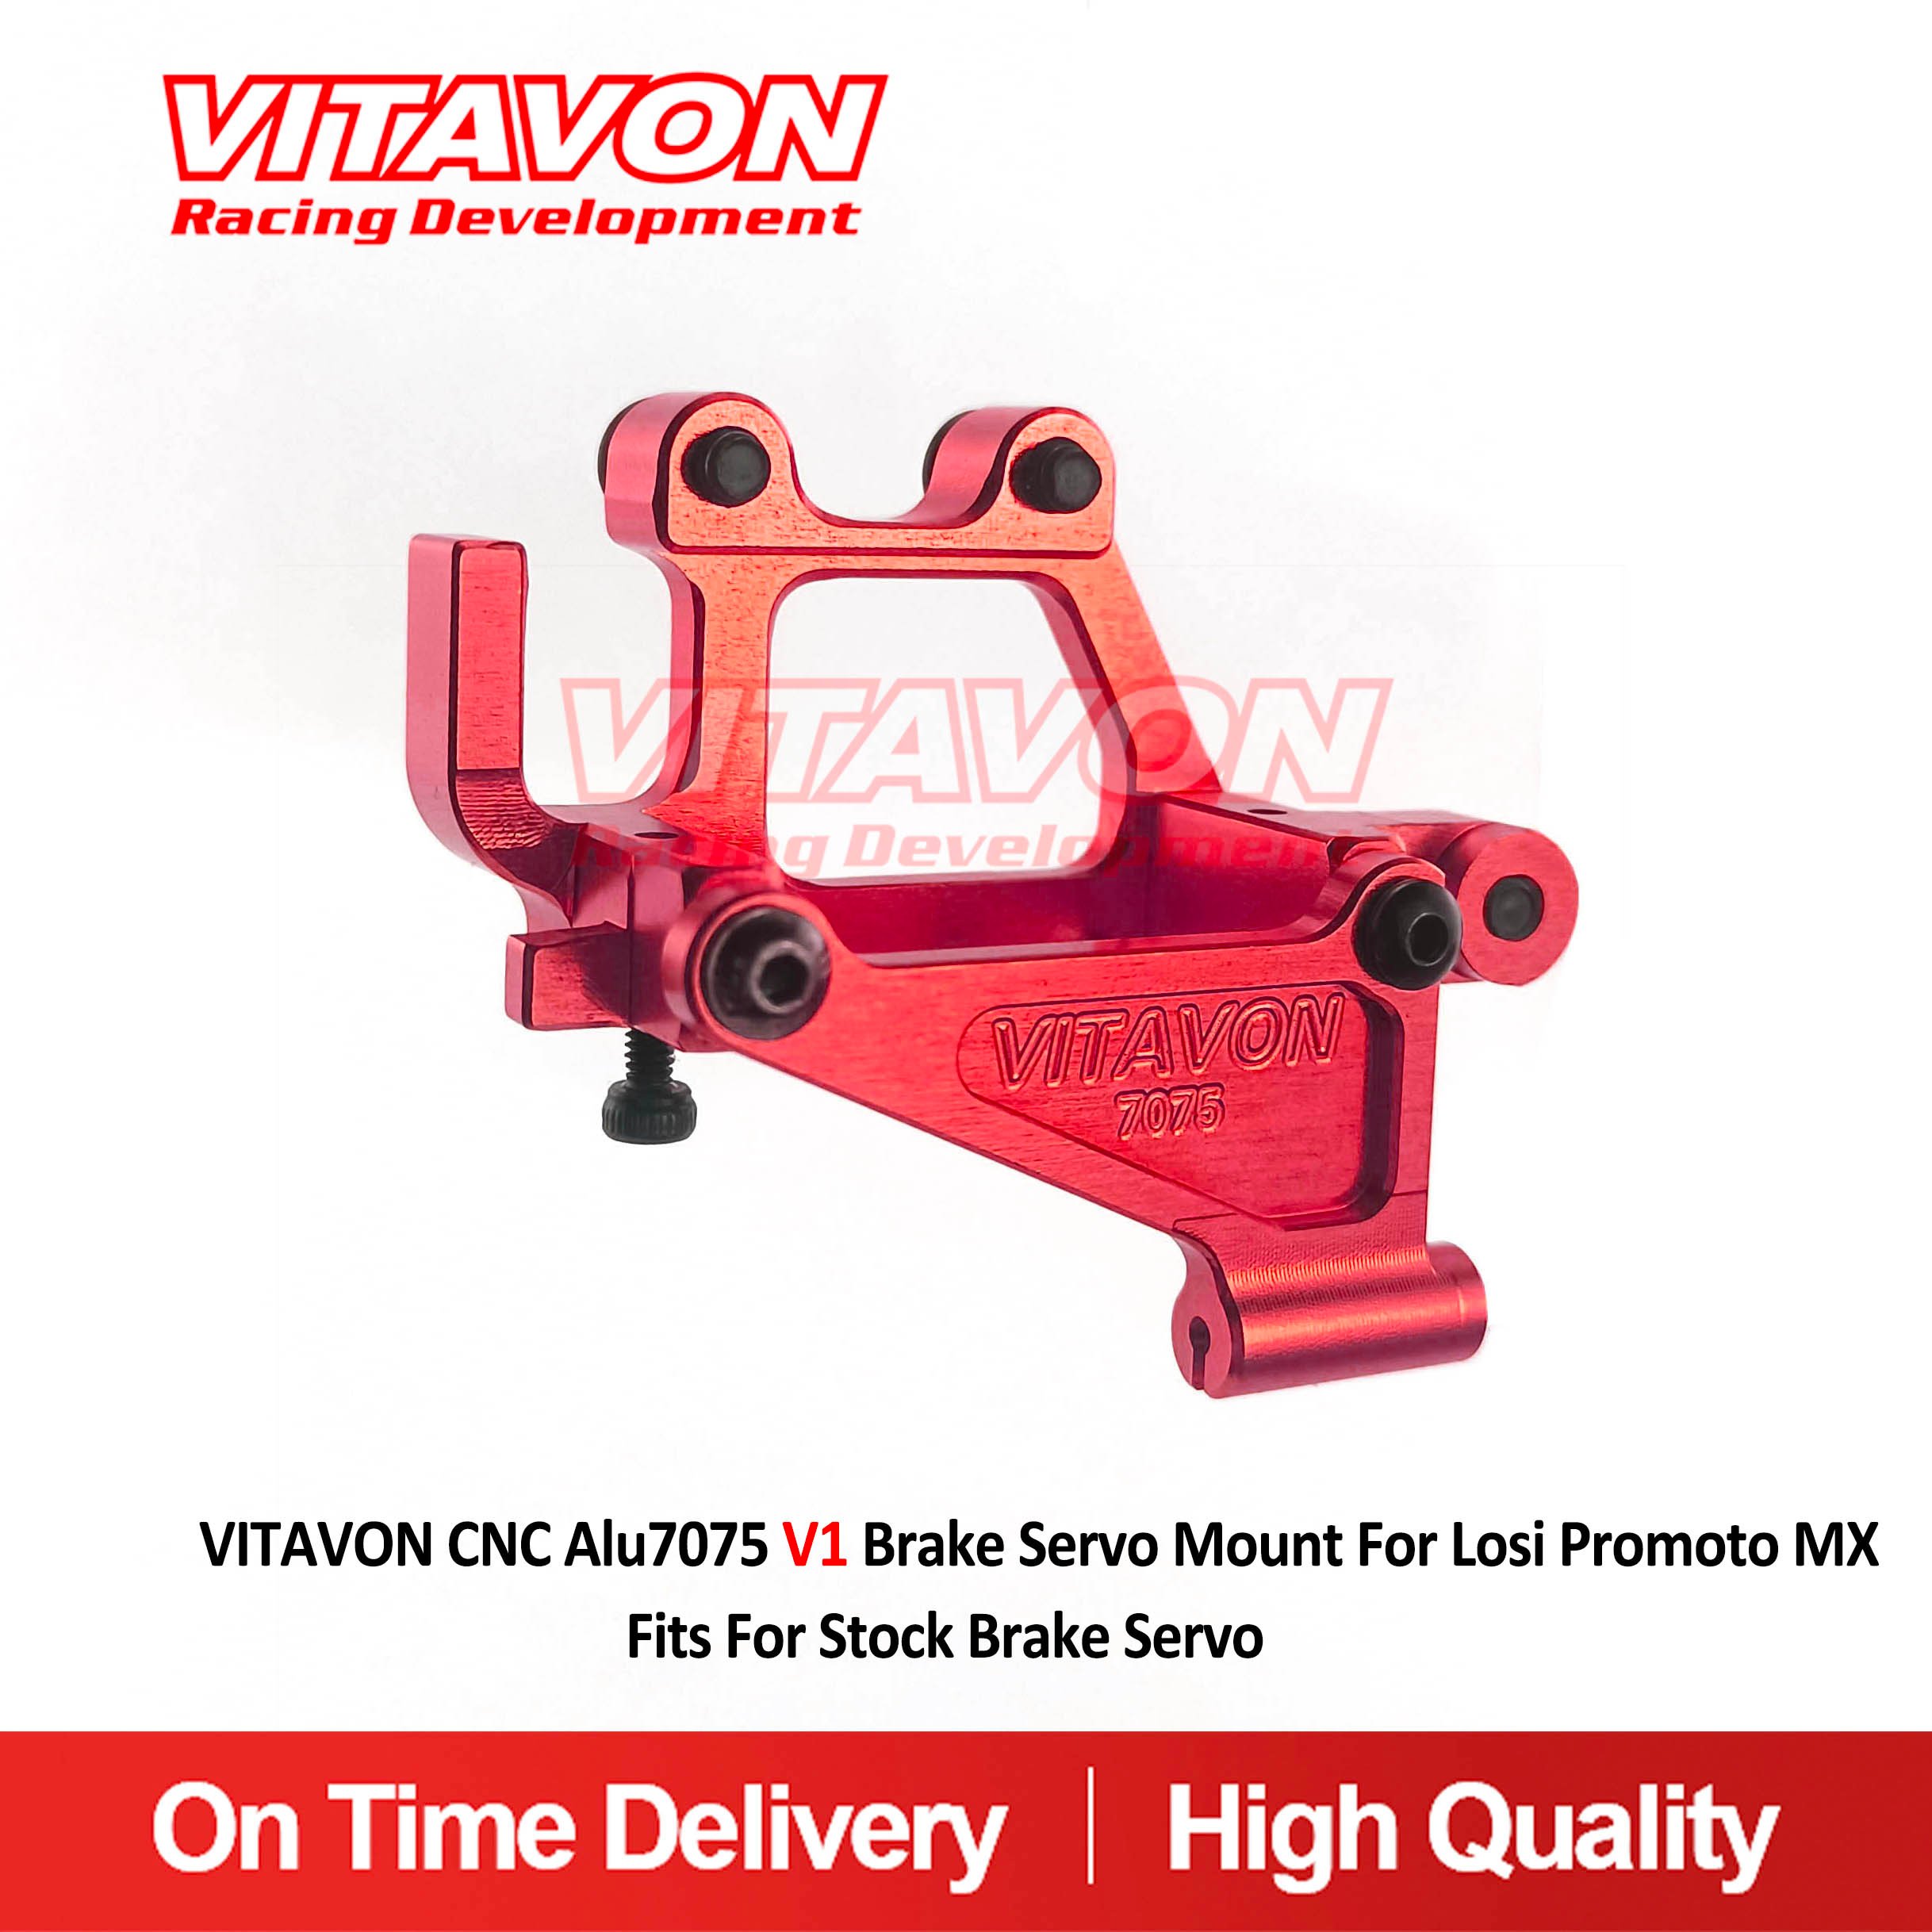 VITAVON CNC Alu7075 V1 Brake Servo Mount For Losi Promoto MX Fits For Stock Brake Servo LOS261013 